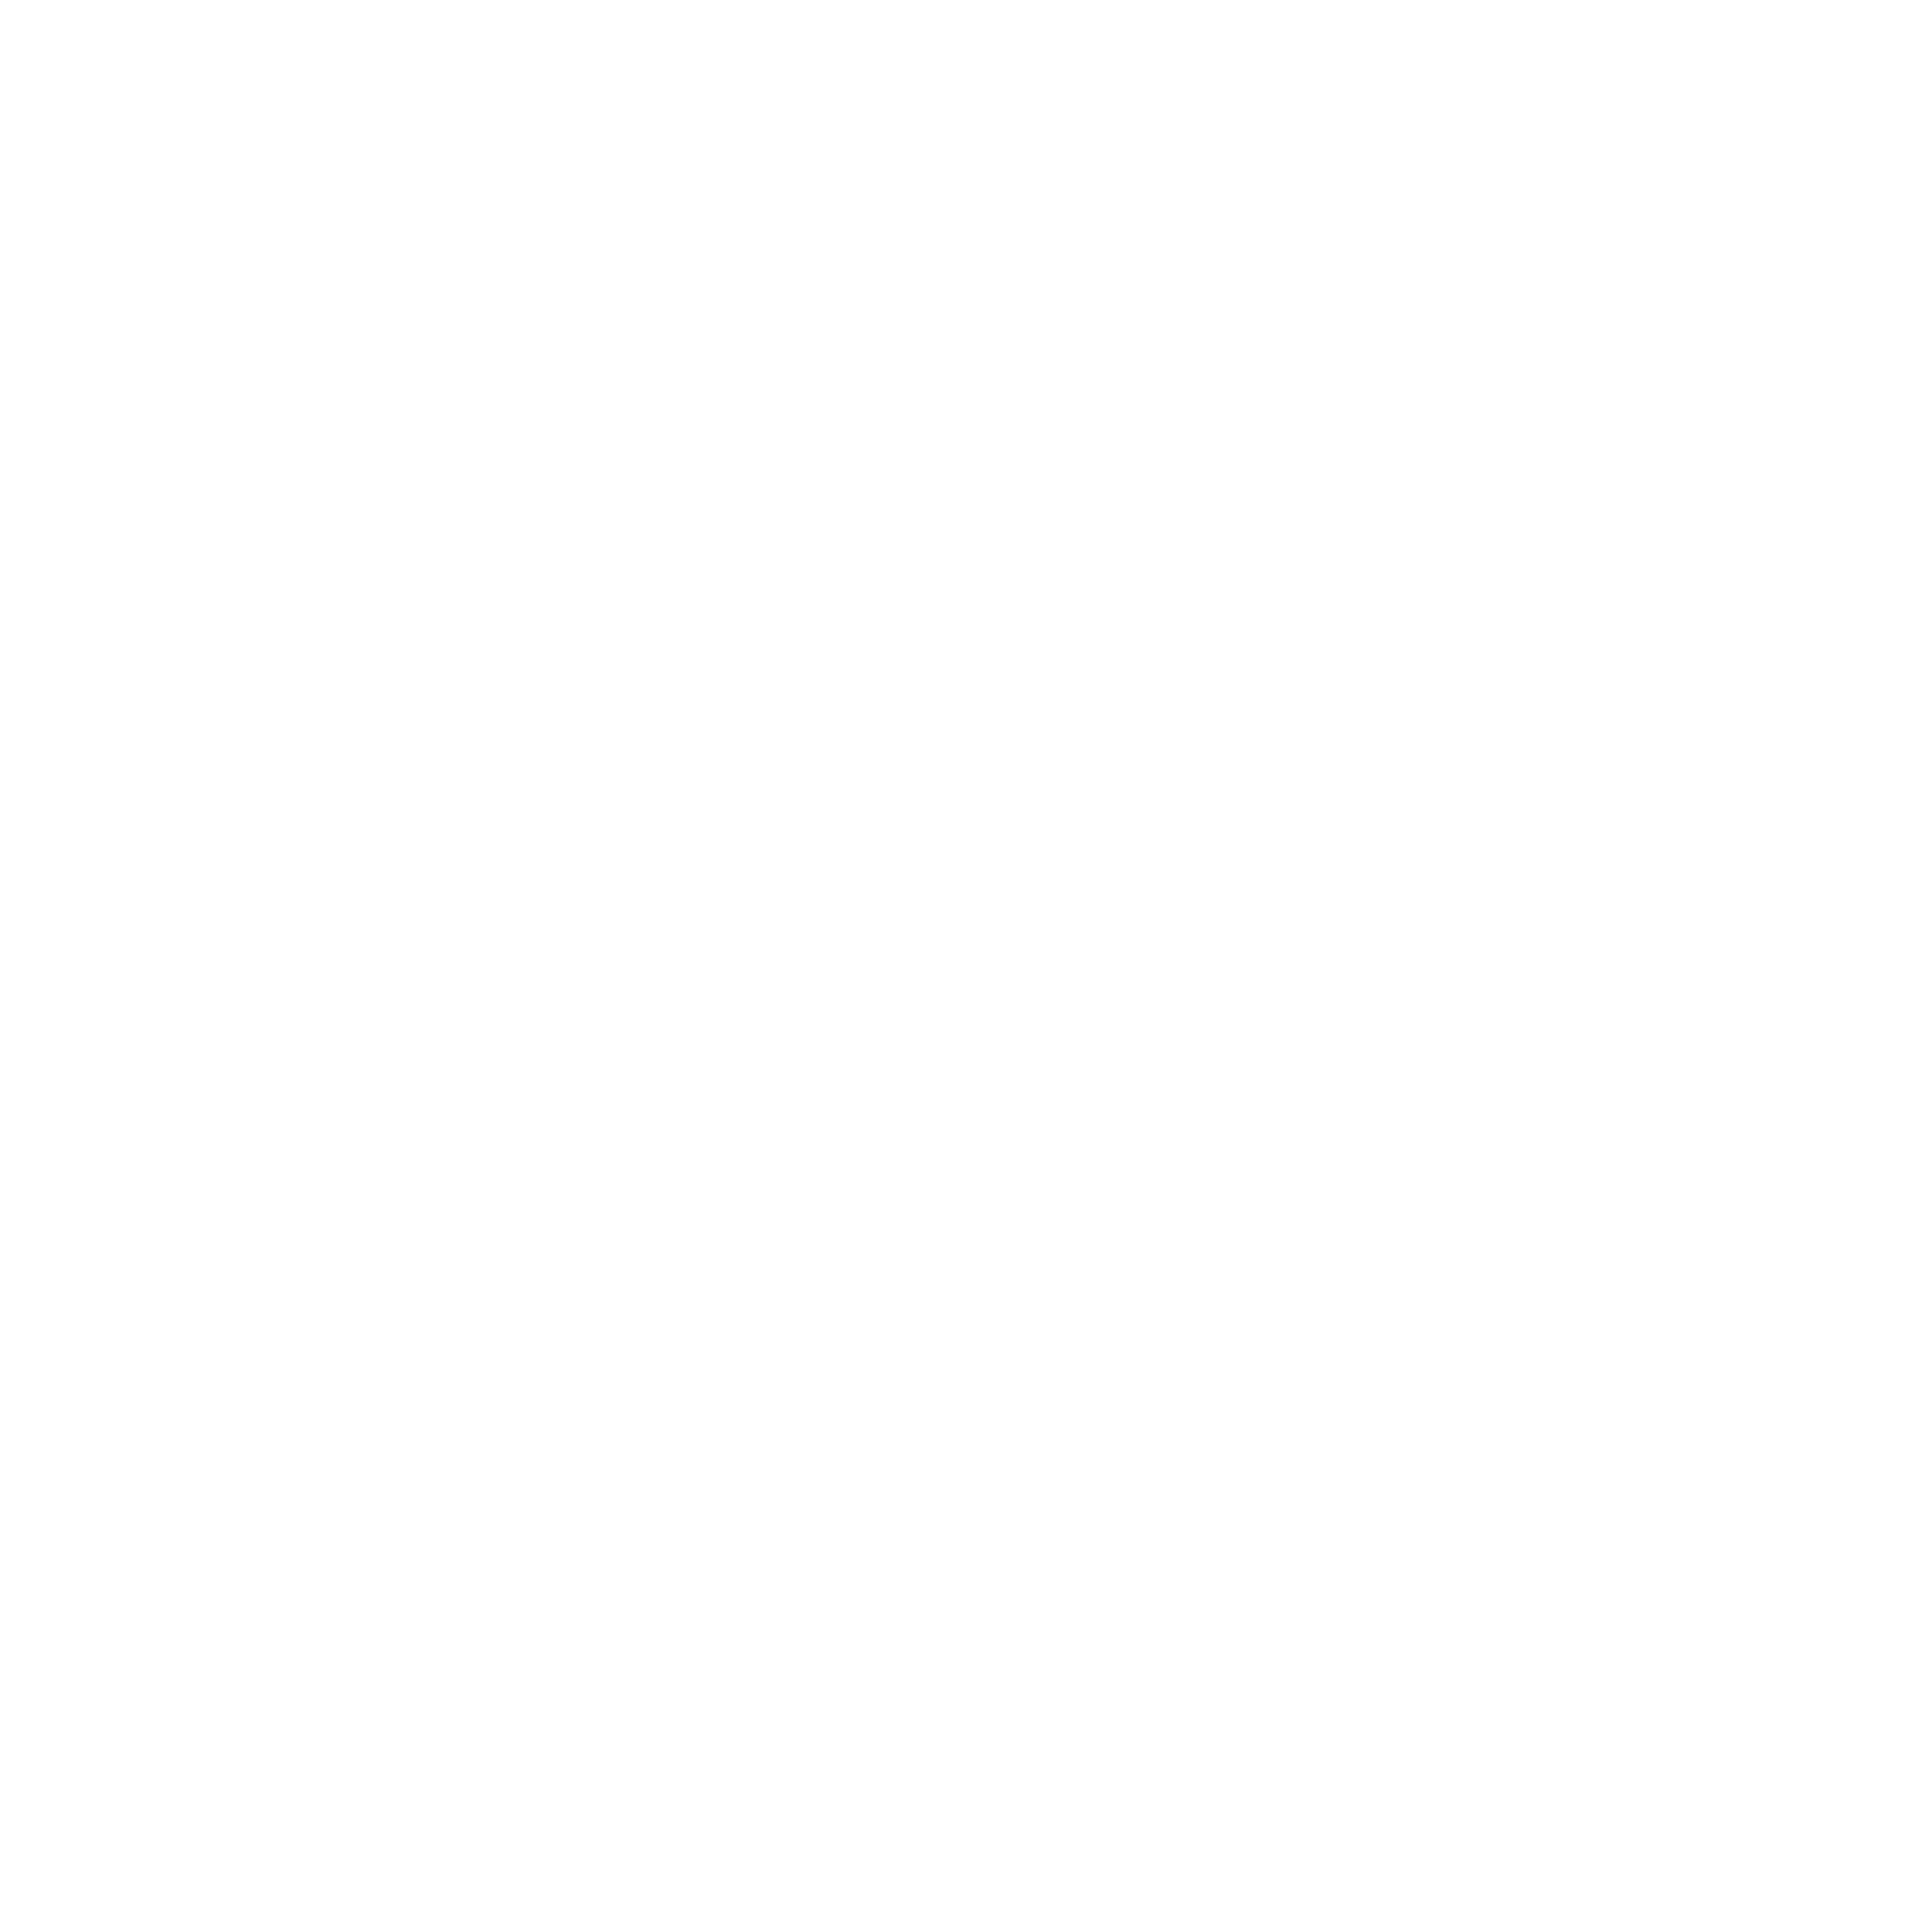 Metaplay monogram icon png